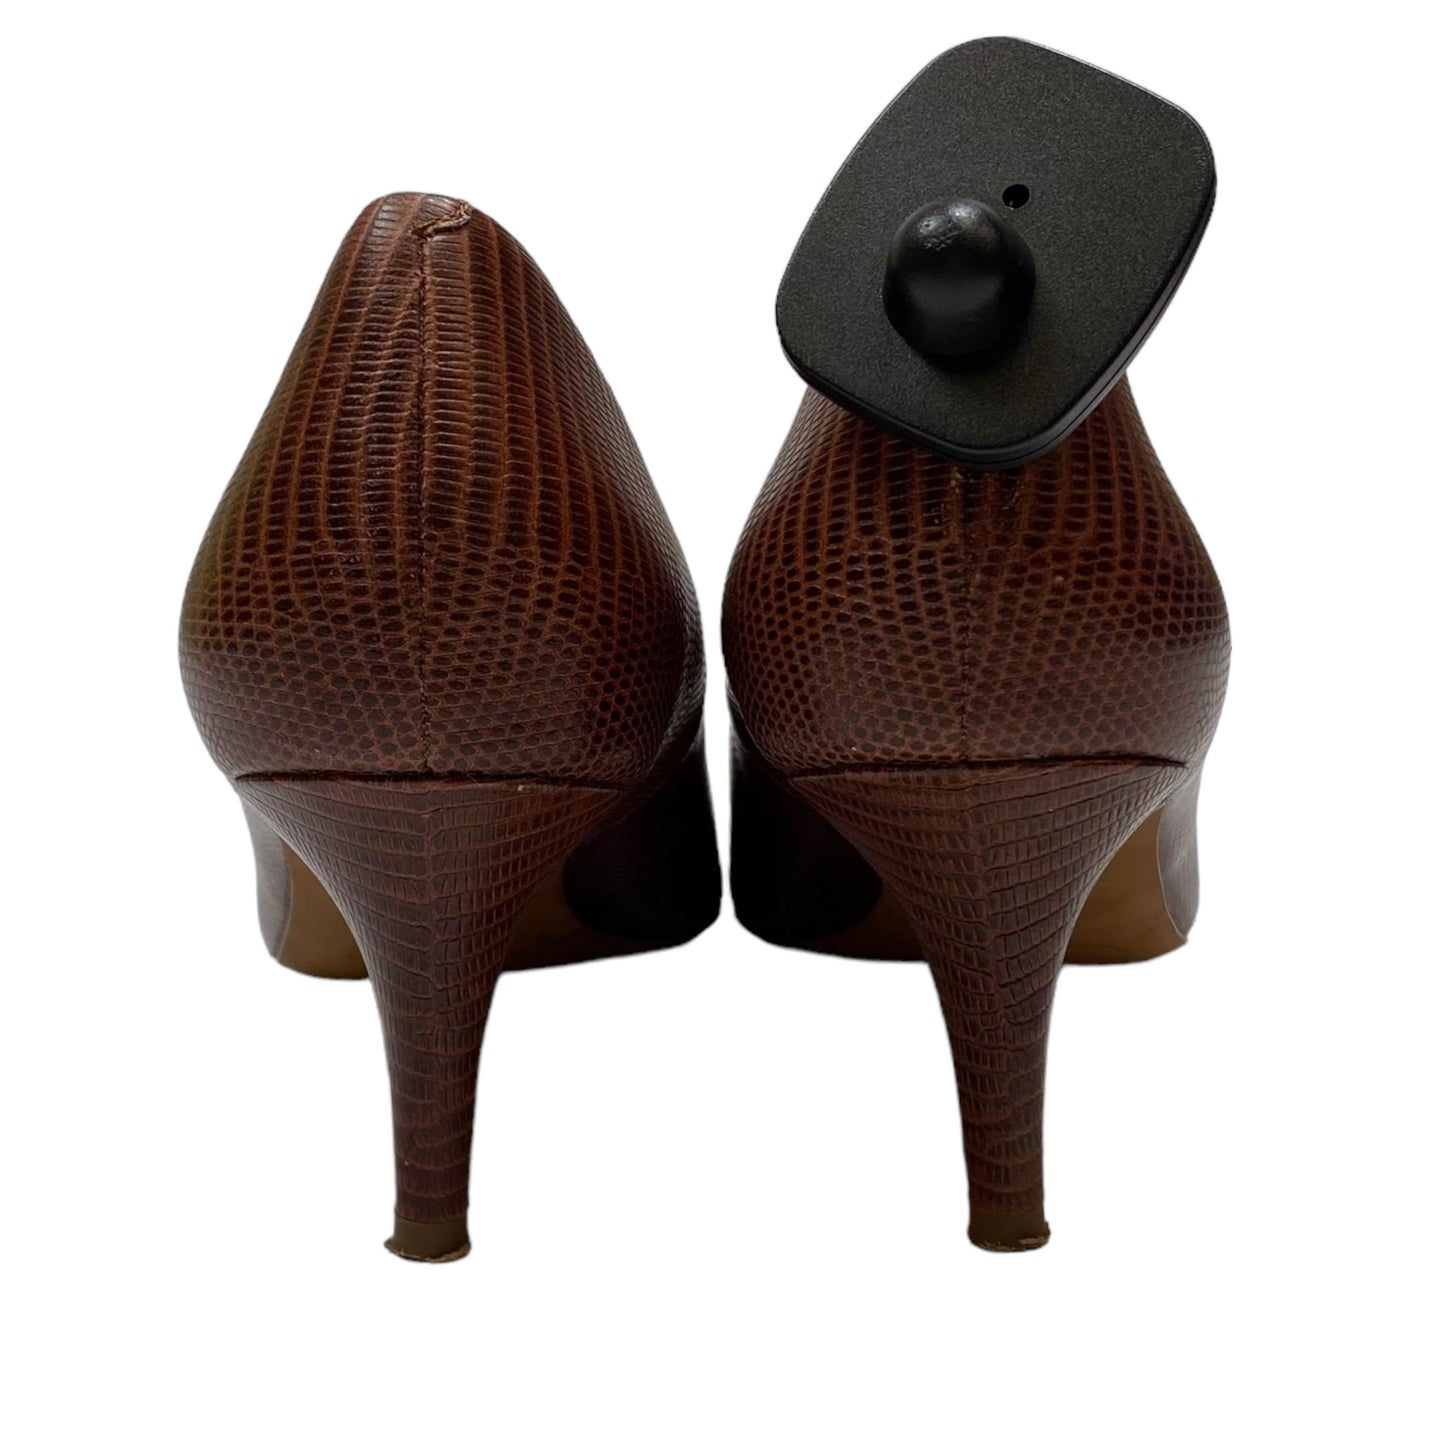 Brown Shoes Heels Stiletto Designer Cole-haan, Size 10